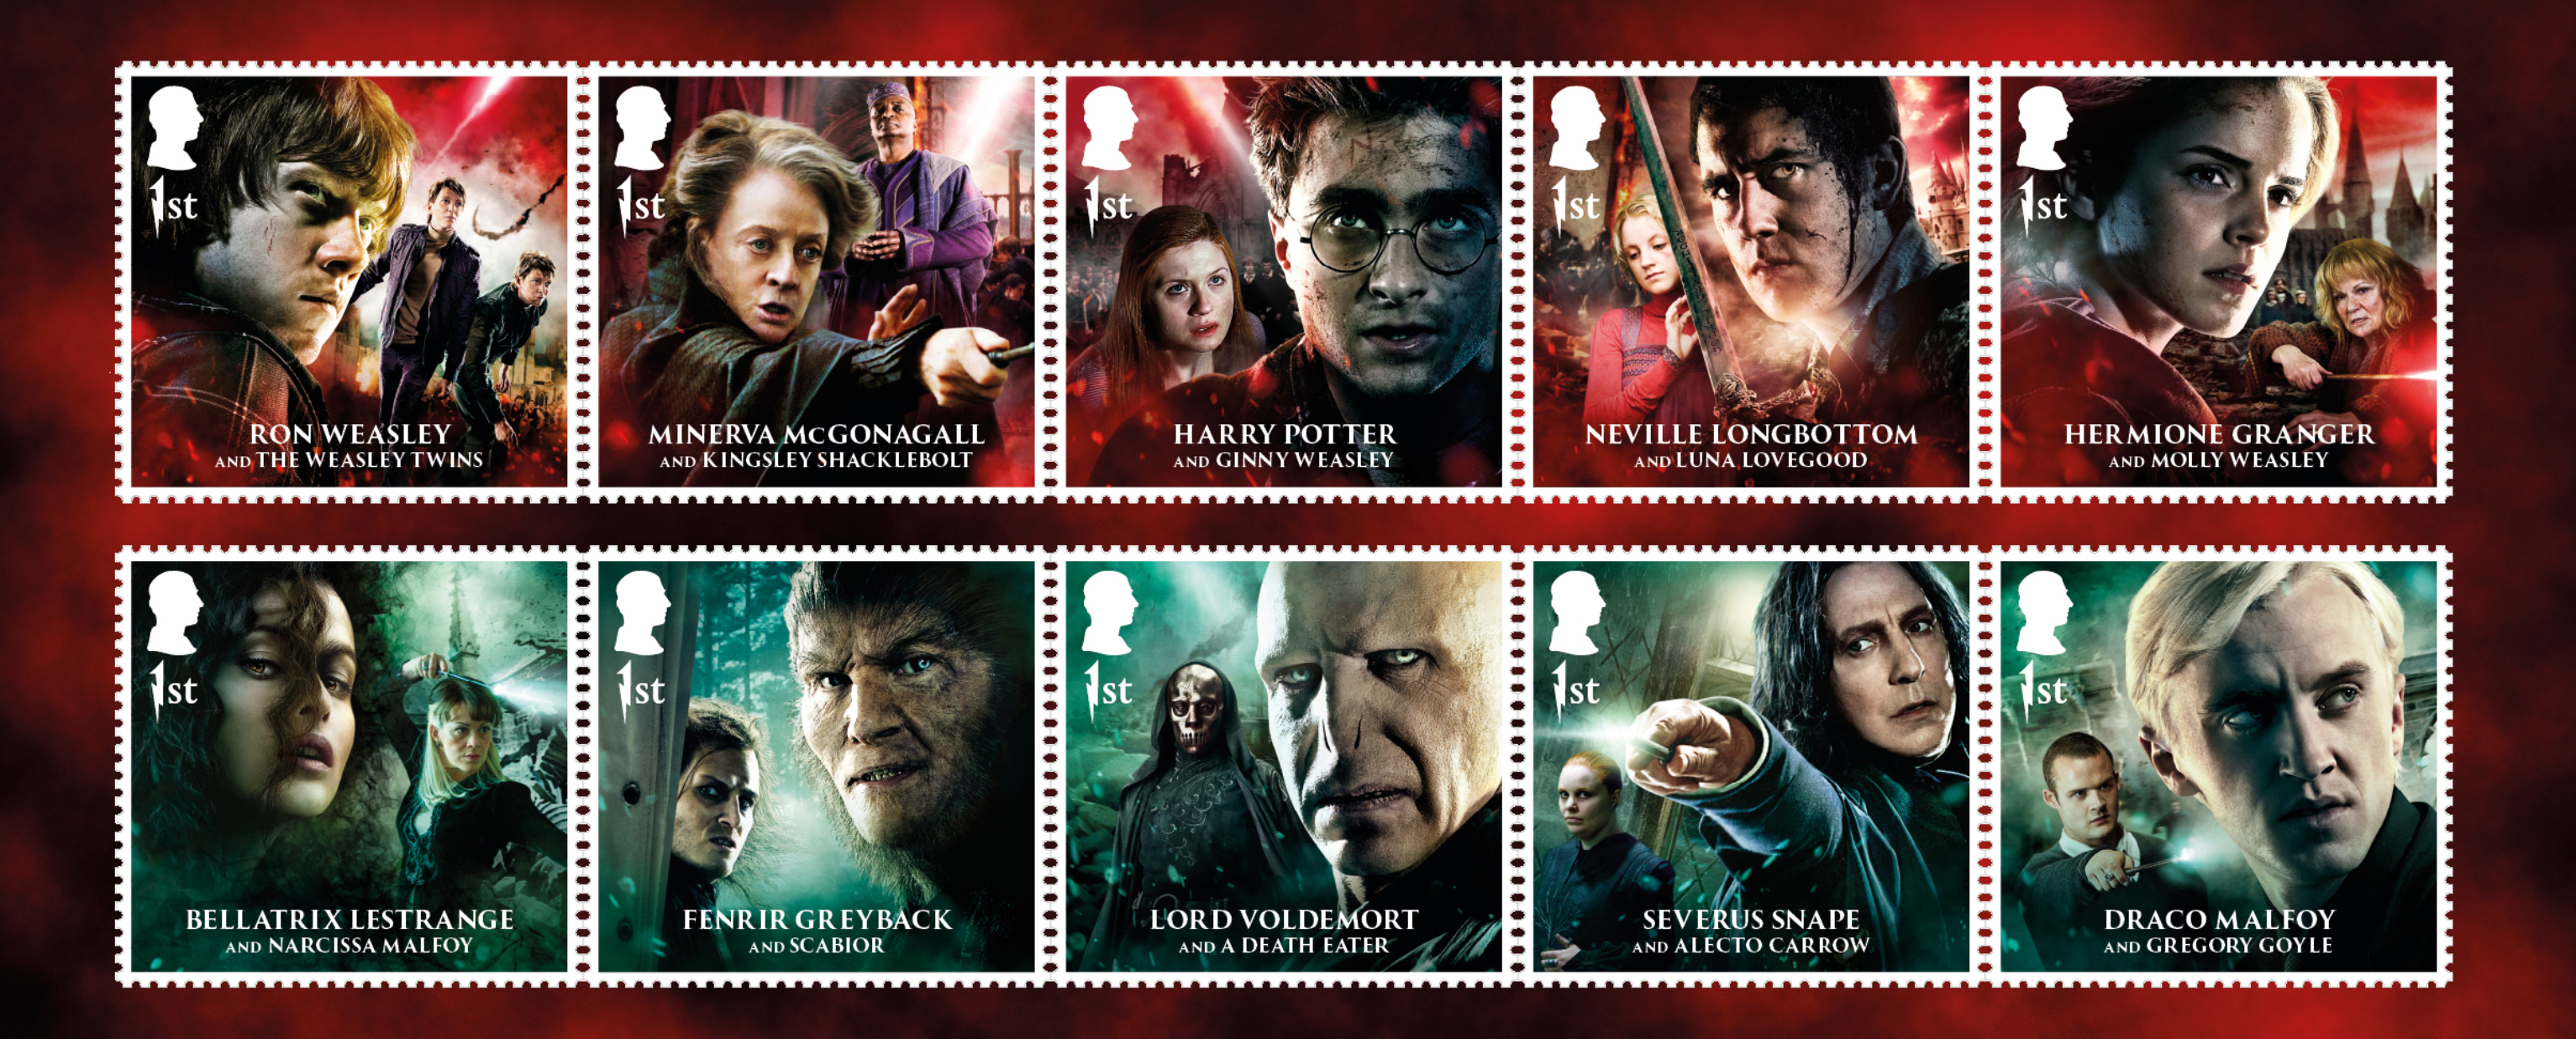 Royal Mail release special Harry Potter Battle of Hogwarts stamp